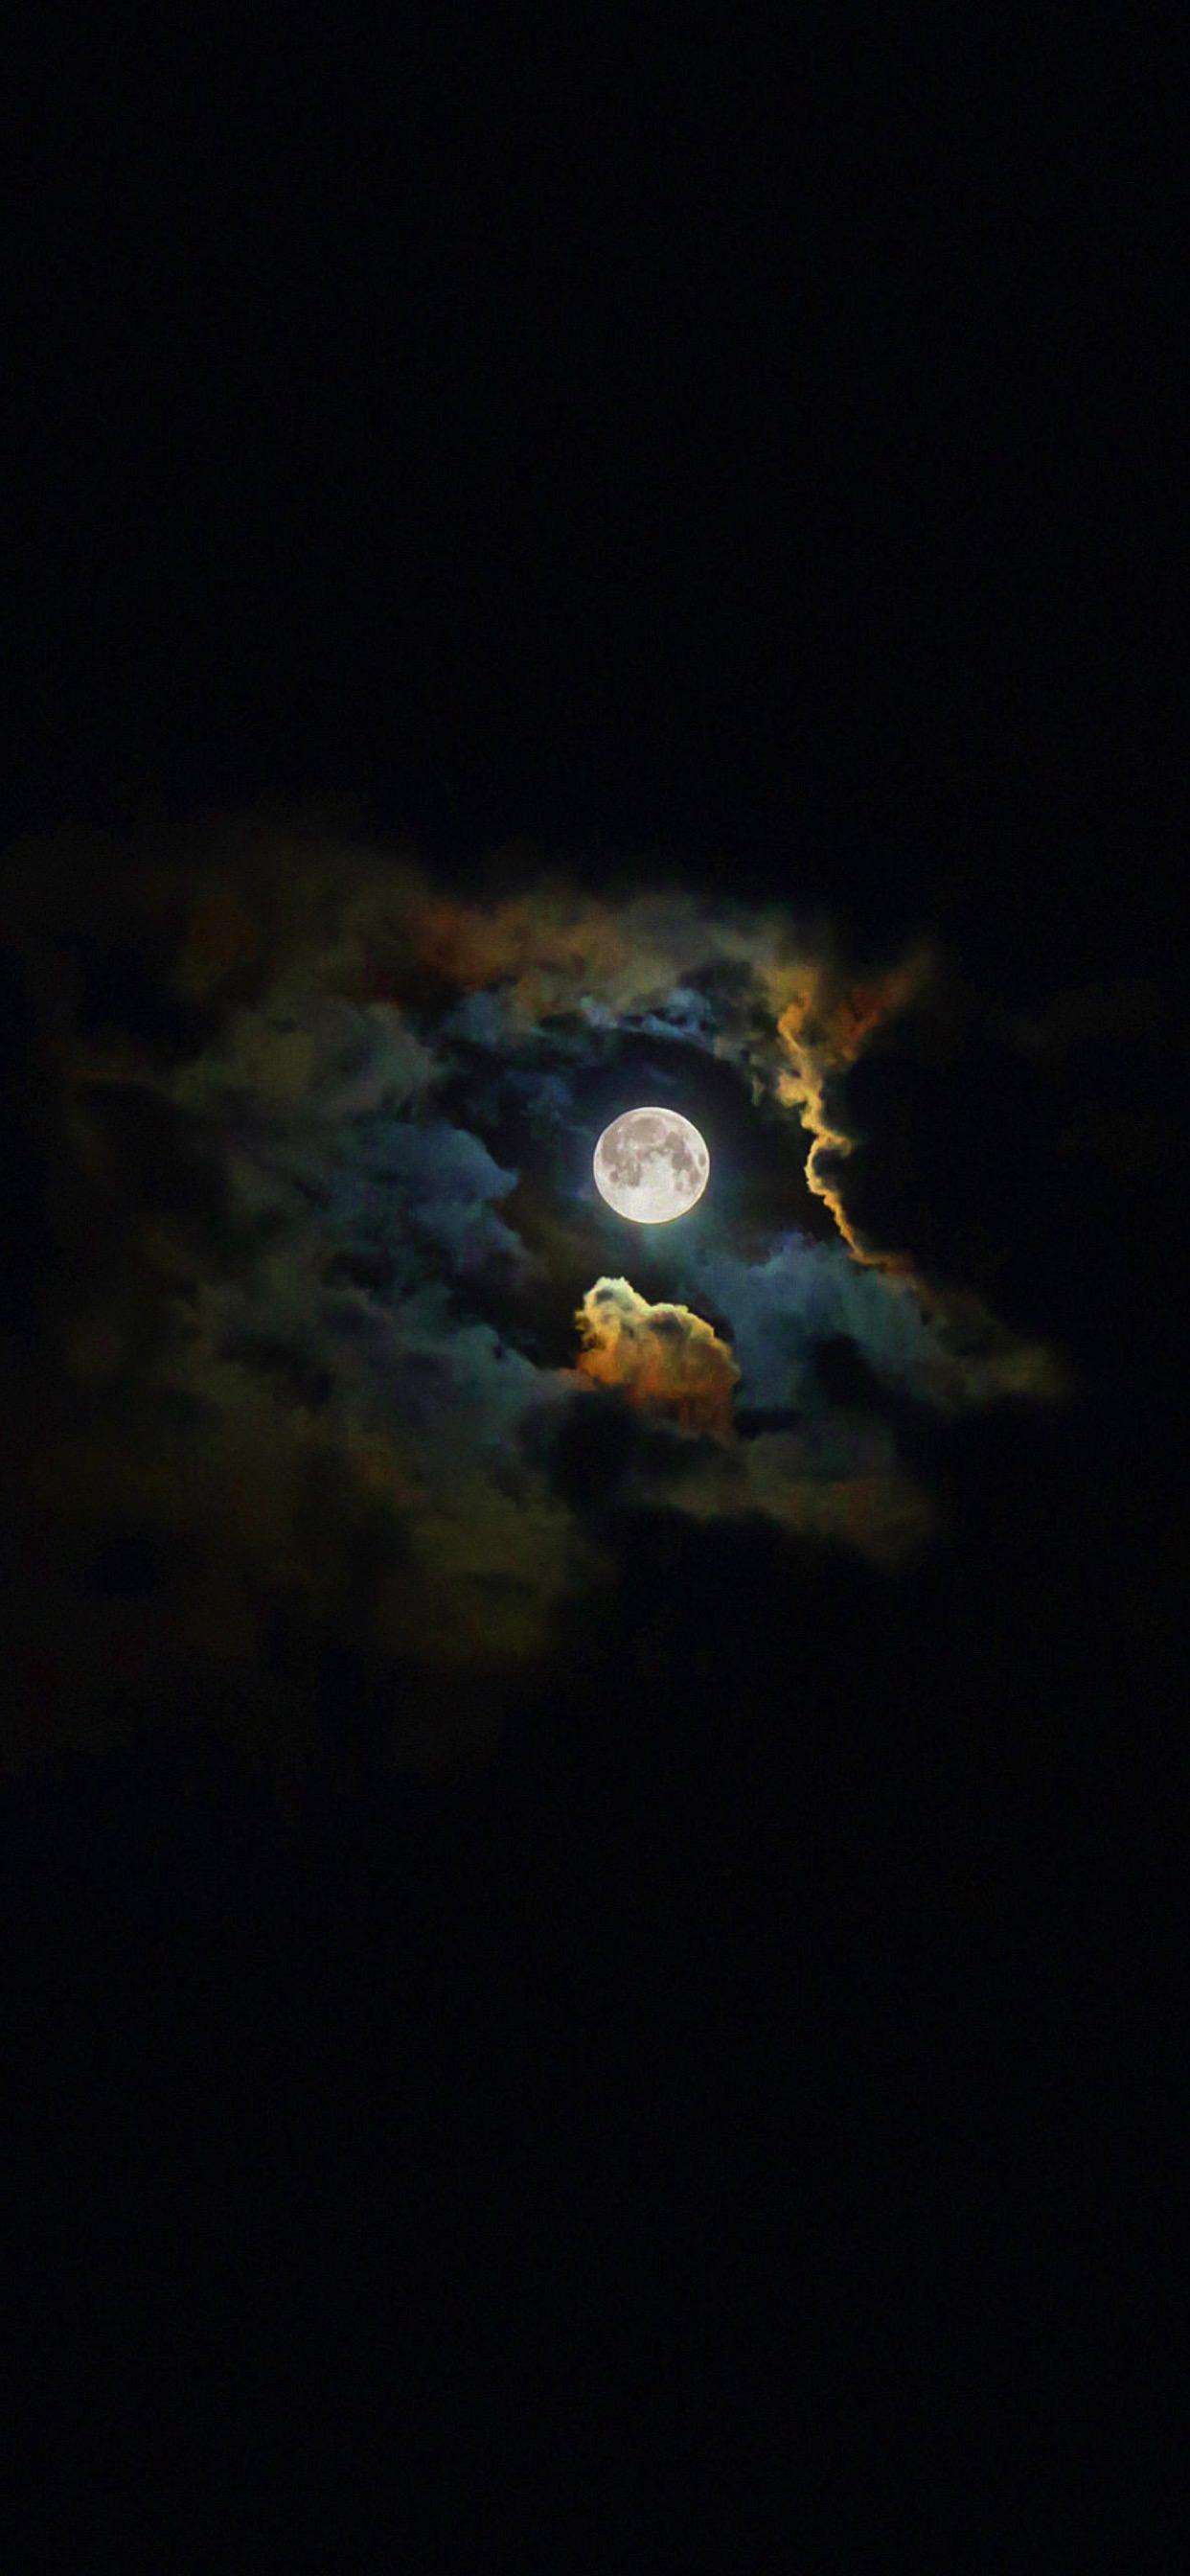 Landscape moon shiny black. wallpaper.sc iPhone XS Max